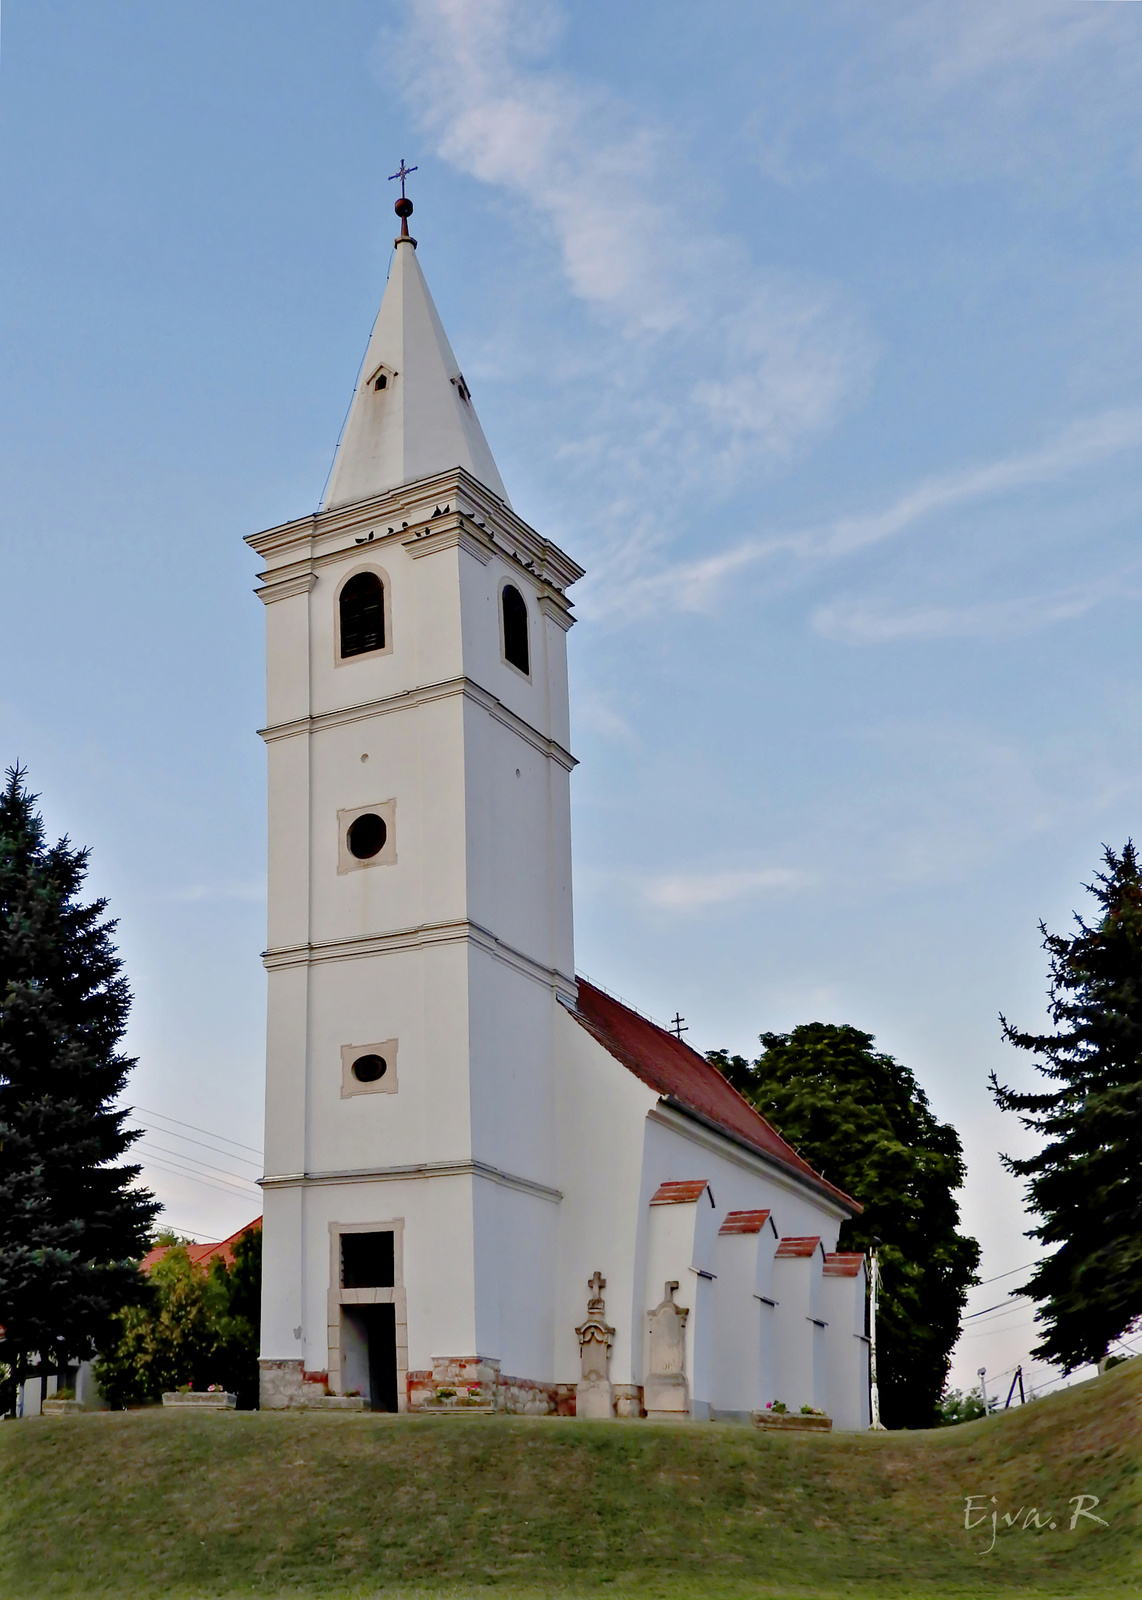 Árpád-kori római katolikus templom